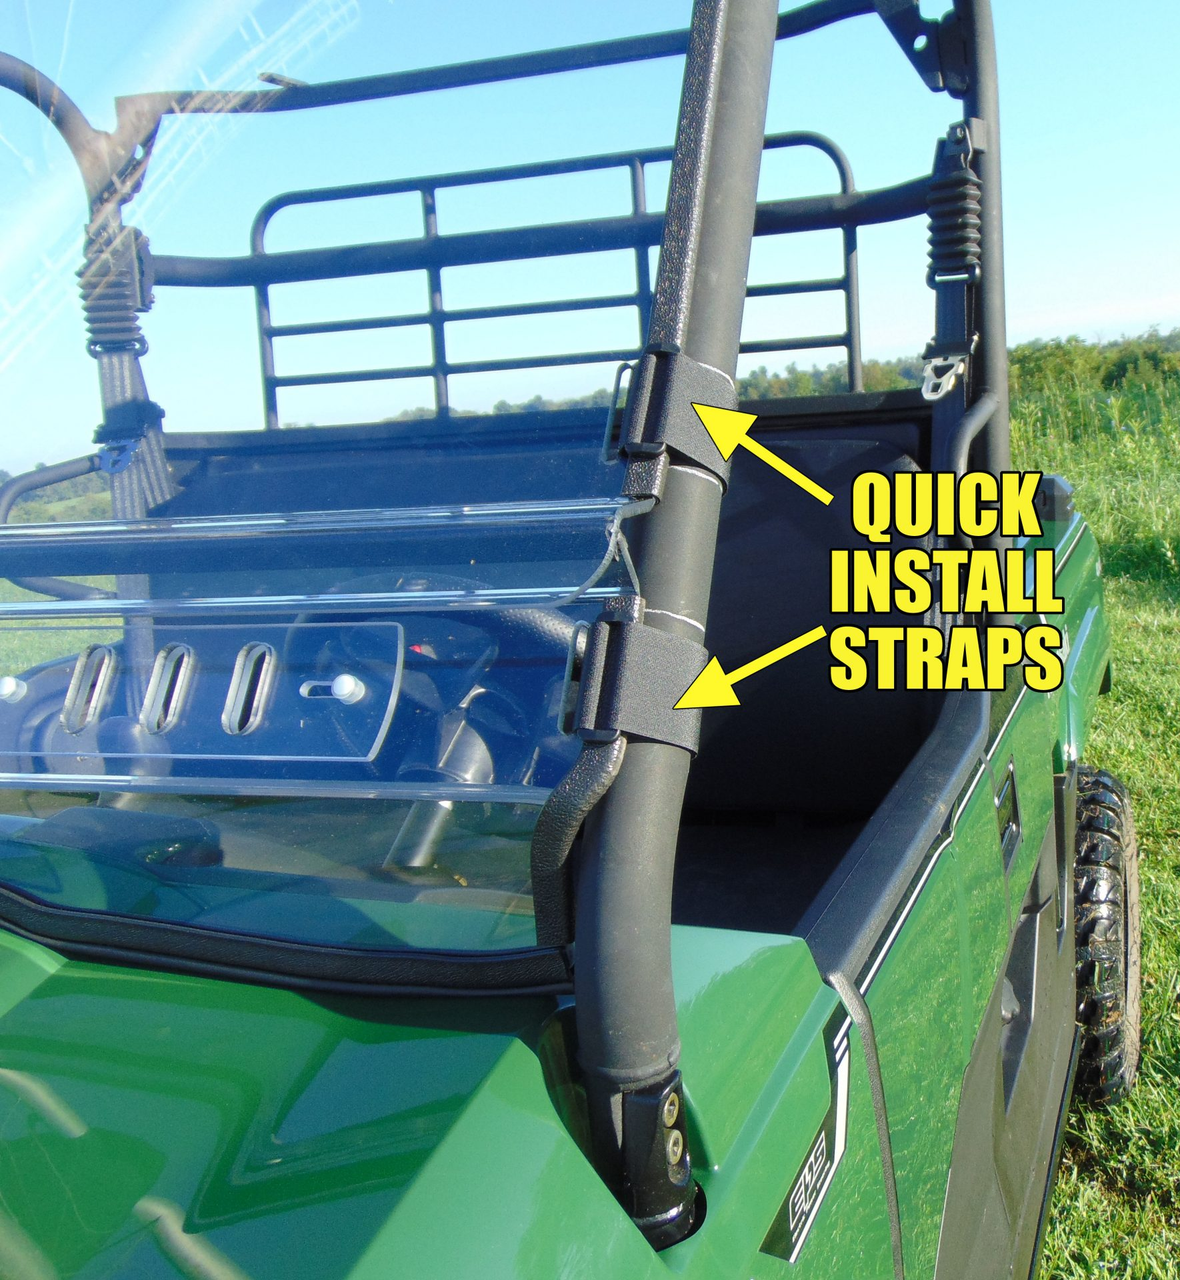 3 Star side x side Kubota RTV X900/X1120 windshield quick install straps